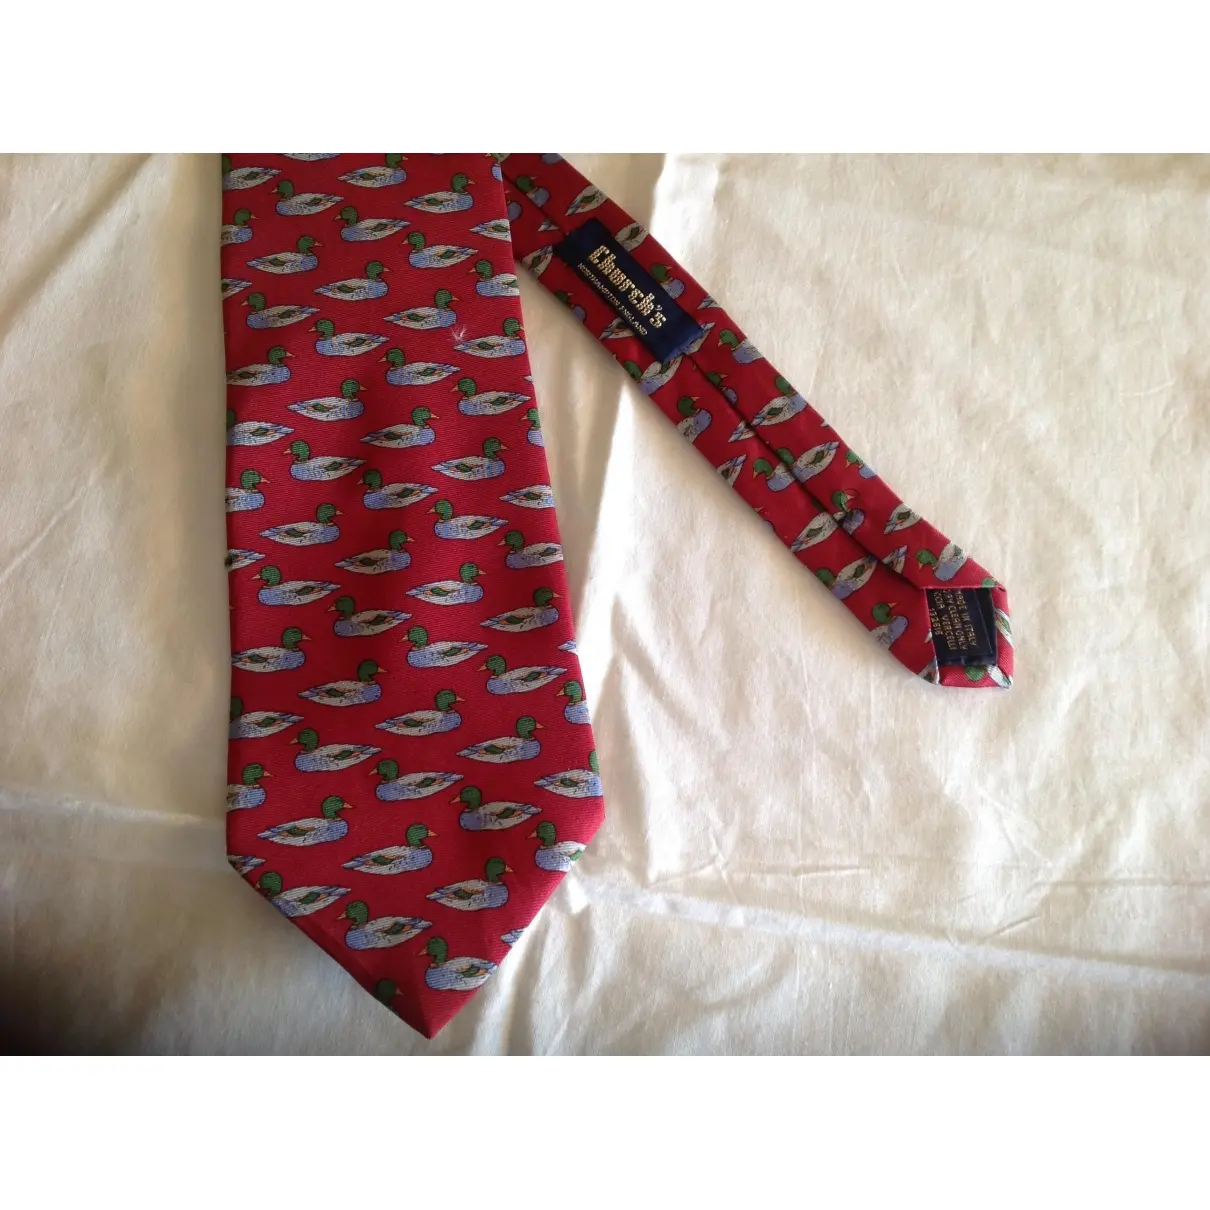 Church's Silk tie for sale - Vintage